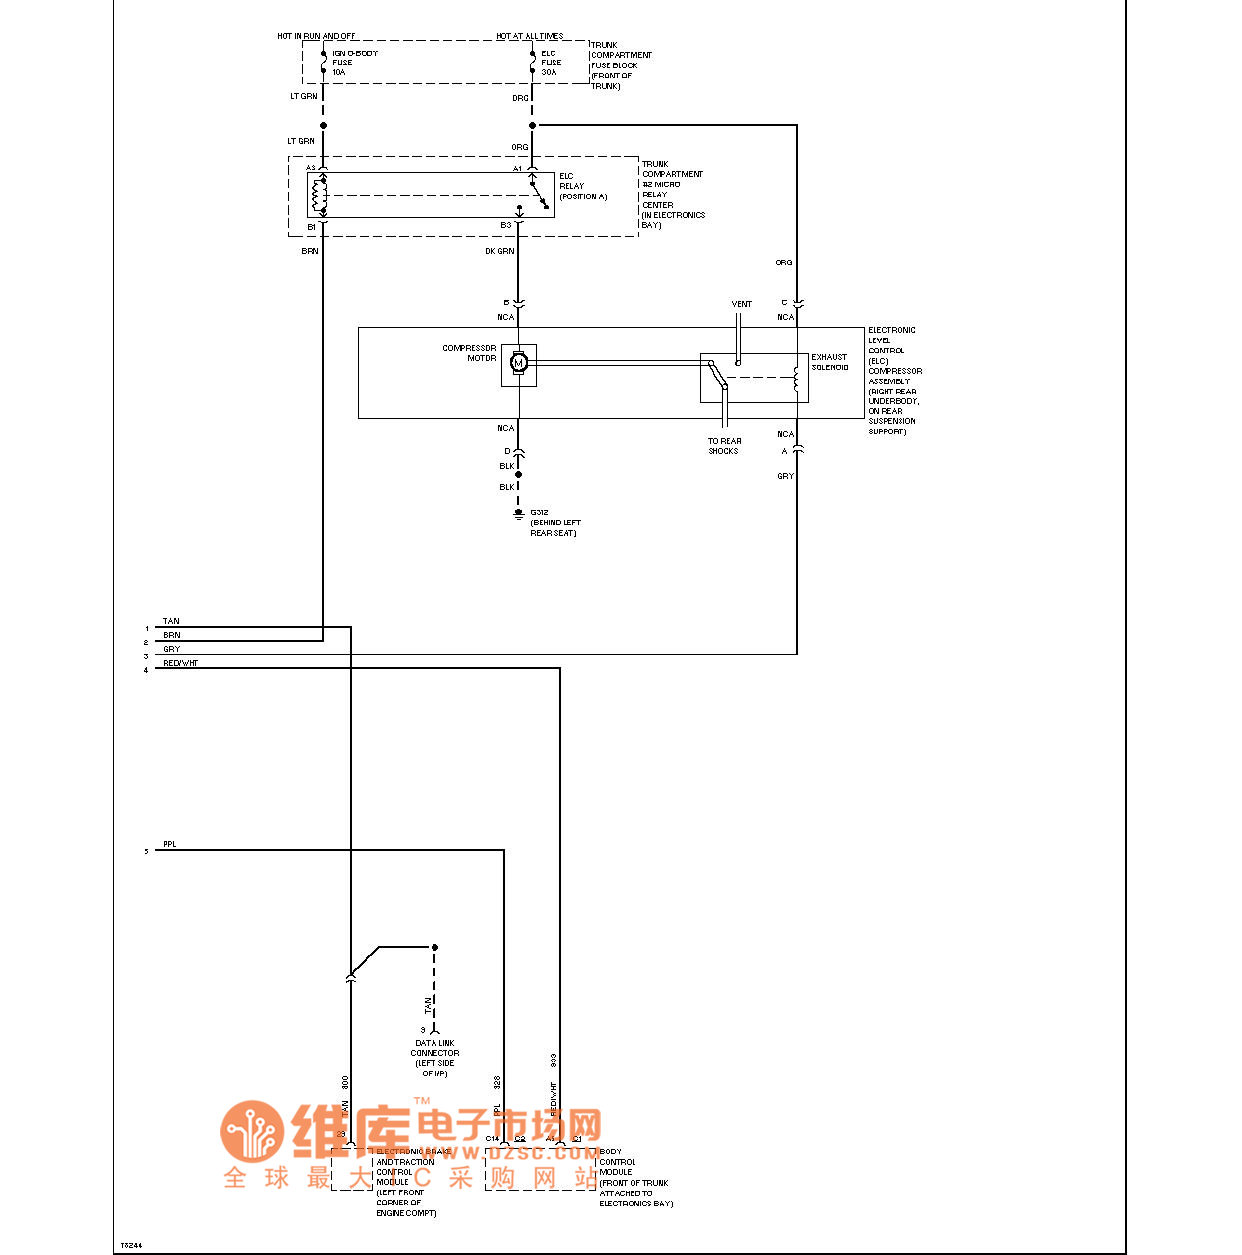 Kaidi Lac electronic suspension circuit diagram (road inductive suspension)